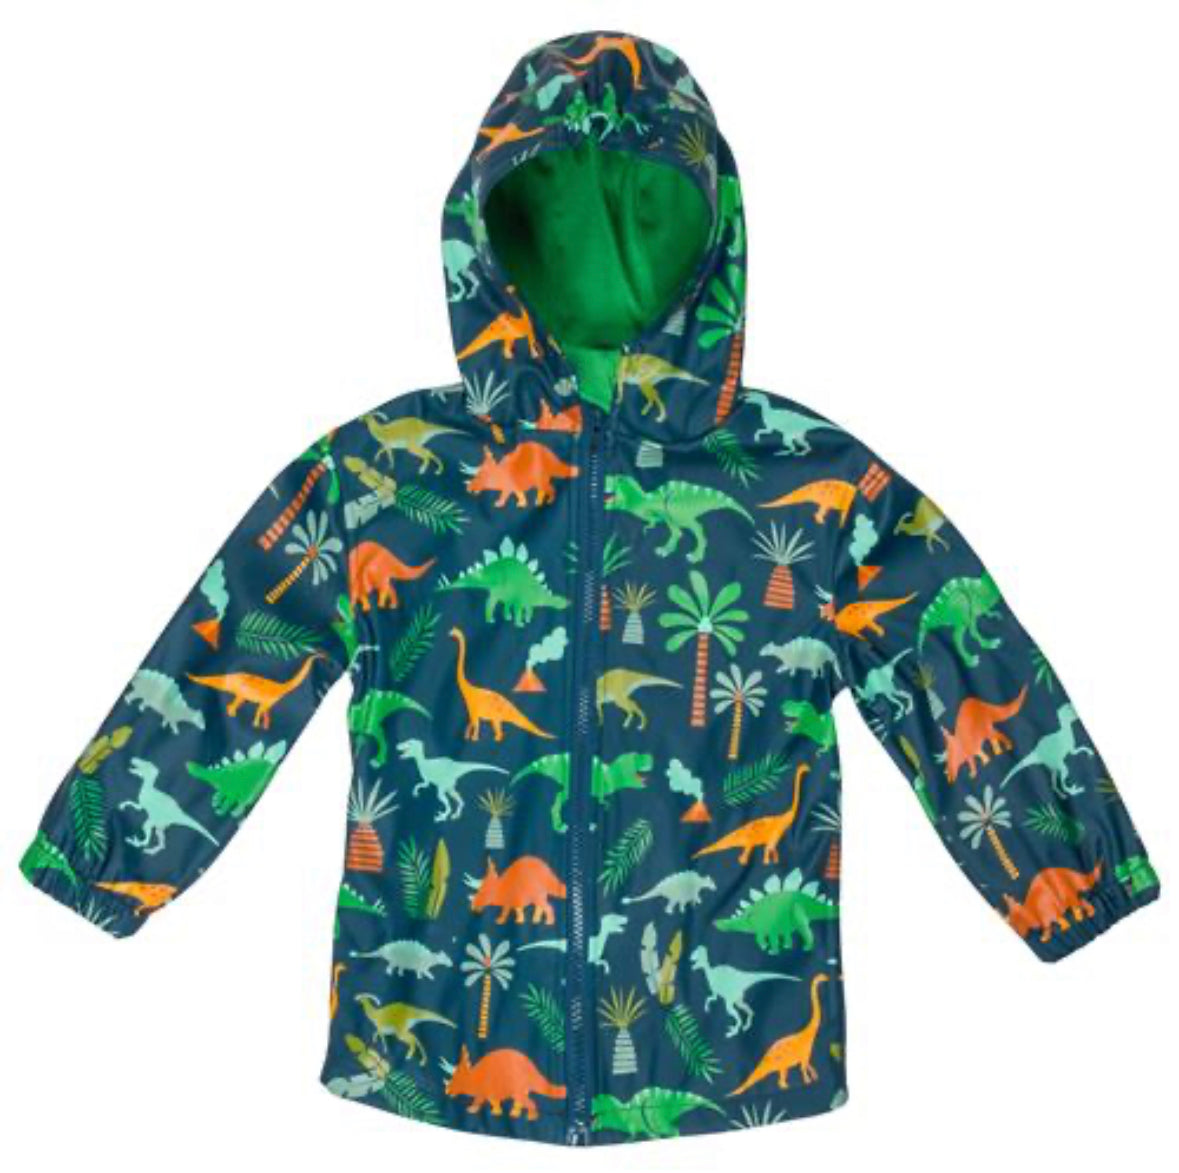 A Stephen Joseph raincoat - Green Dinosaur for children featuring adorable green dinosaurs.